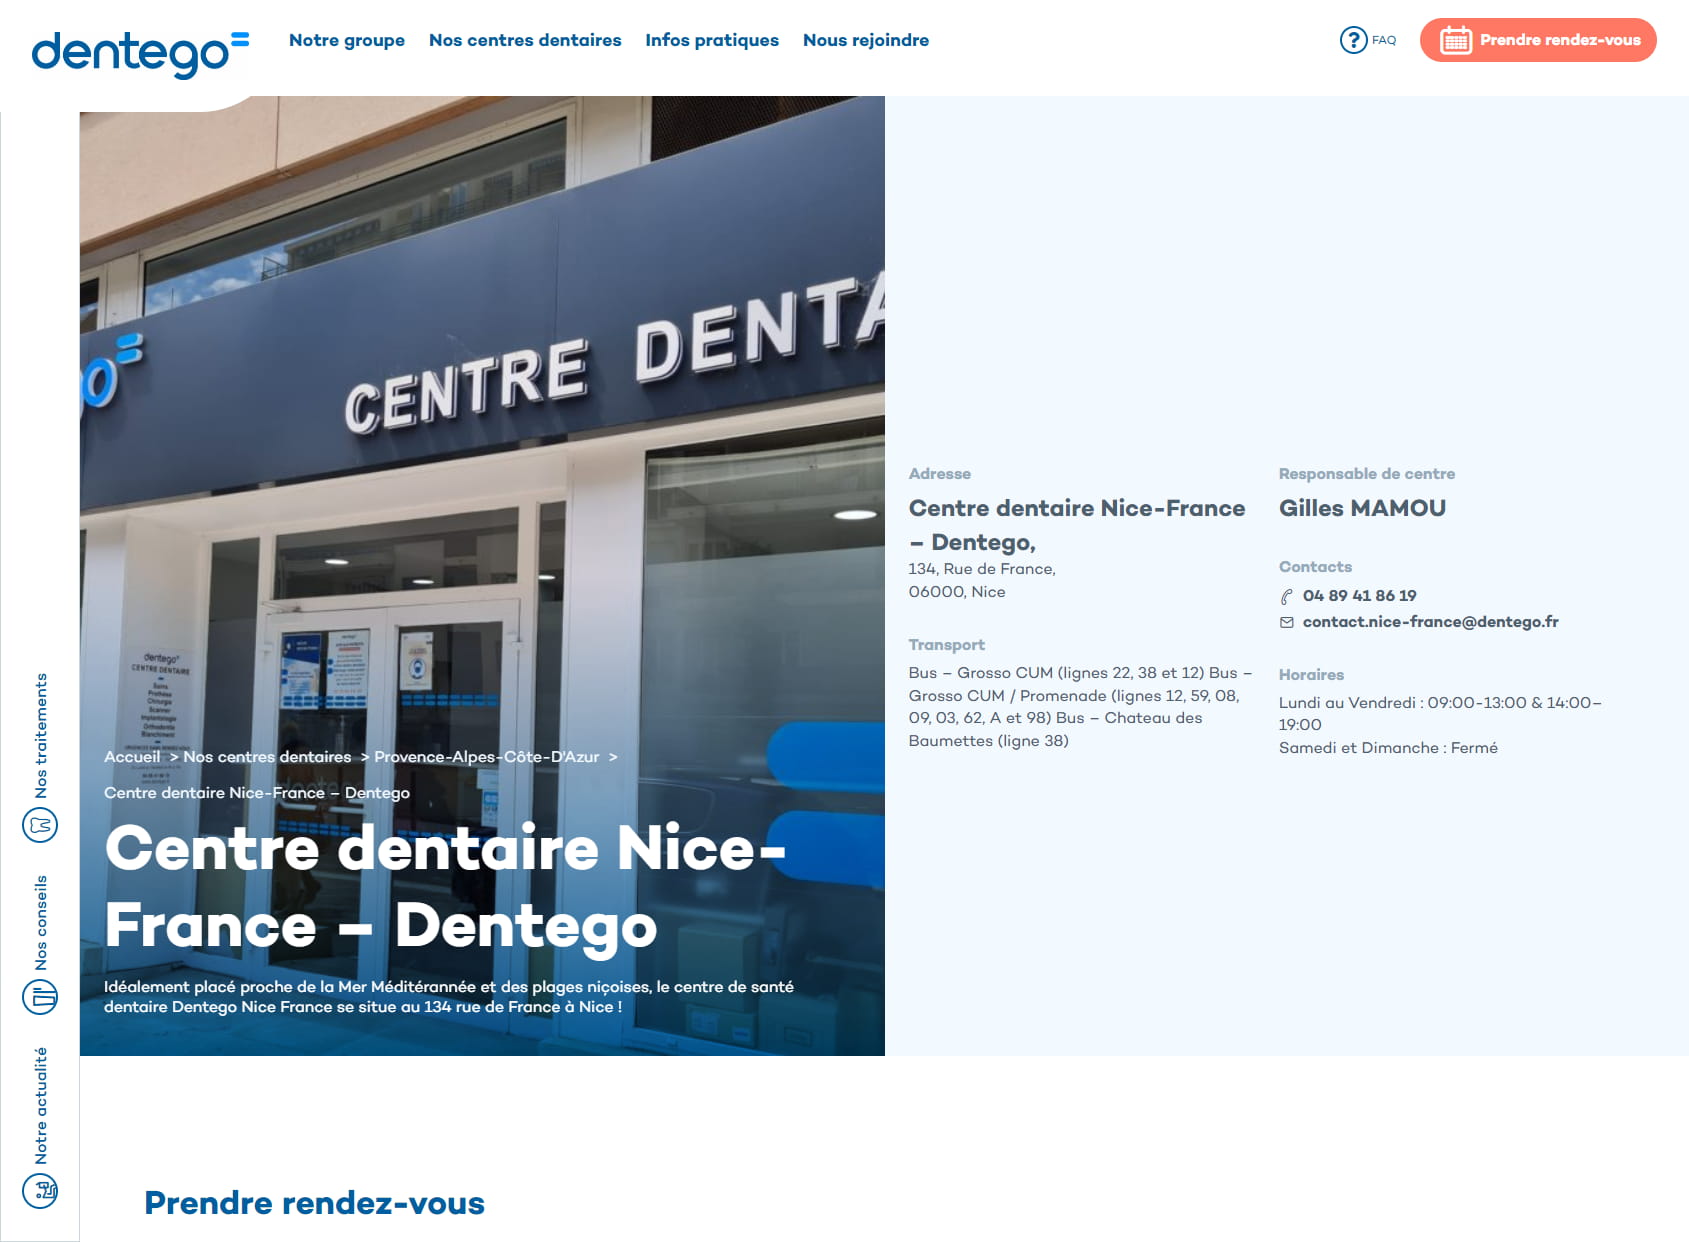 Centre Dentaire Nice France : Dentiste Nice - Dentego